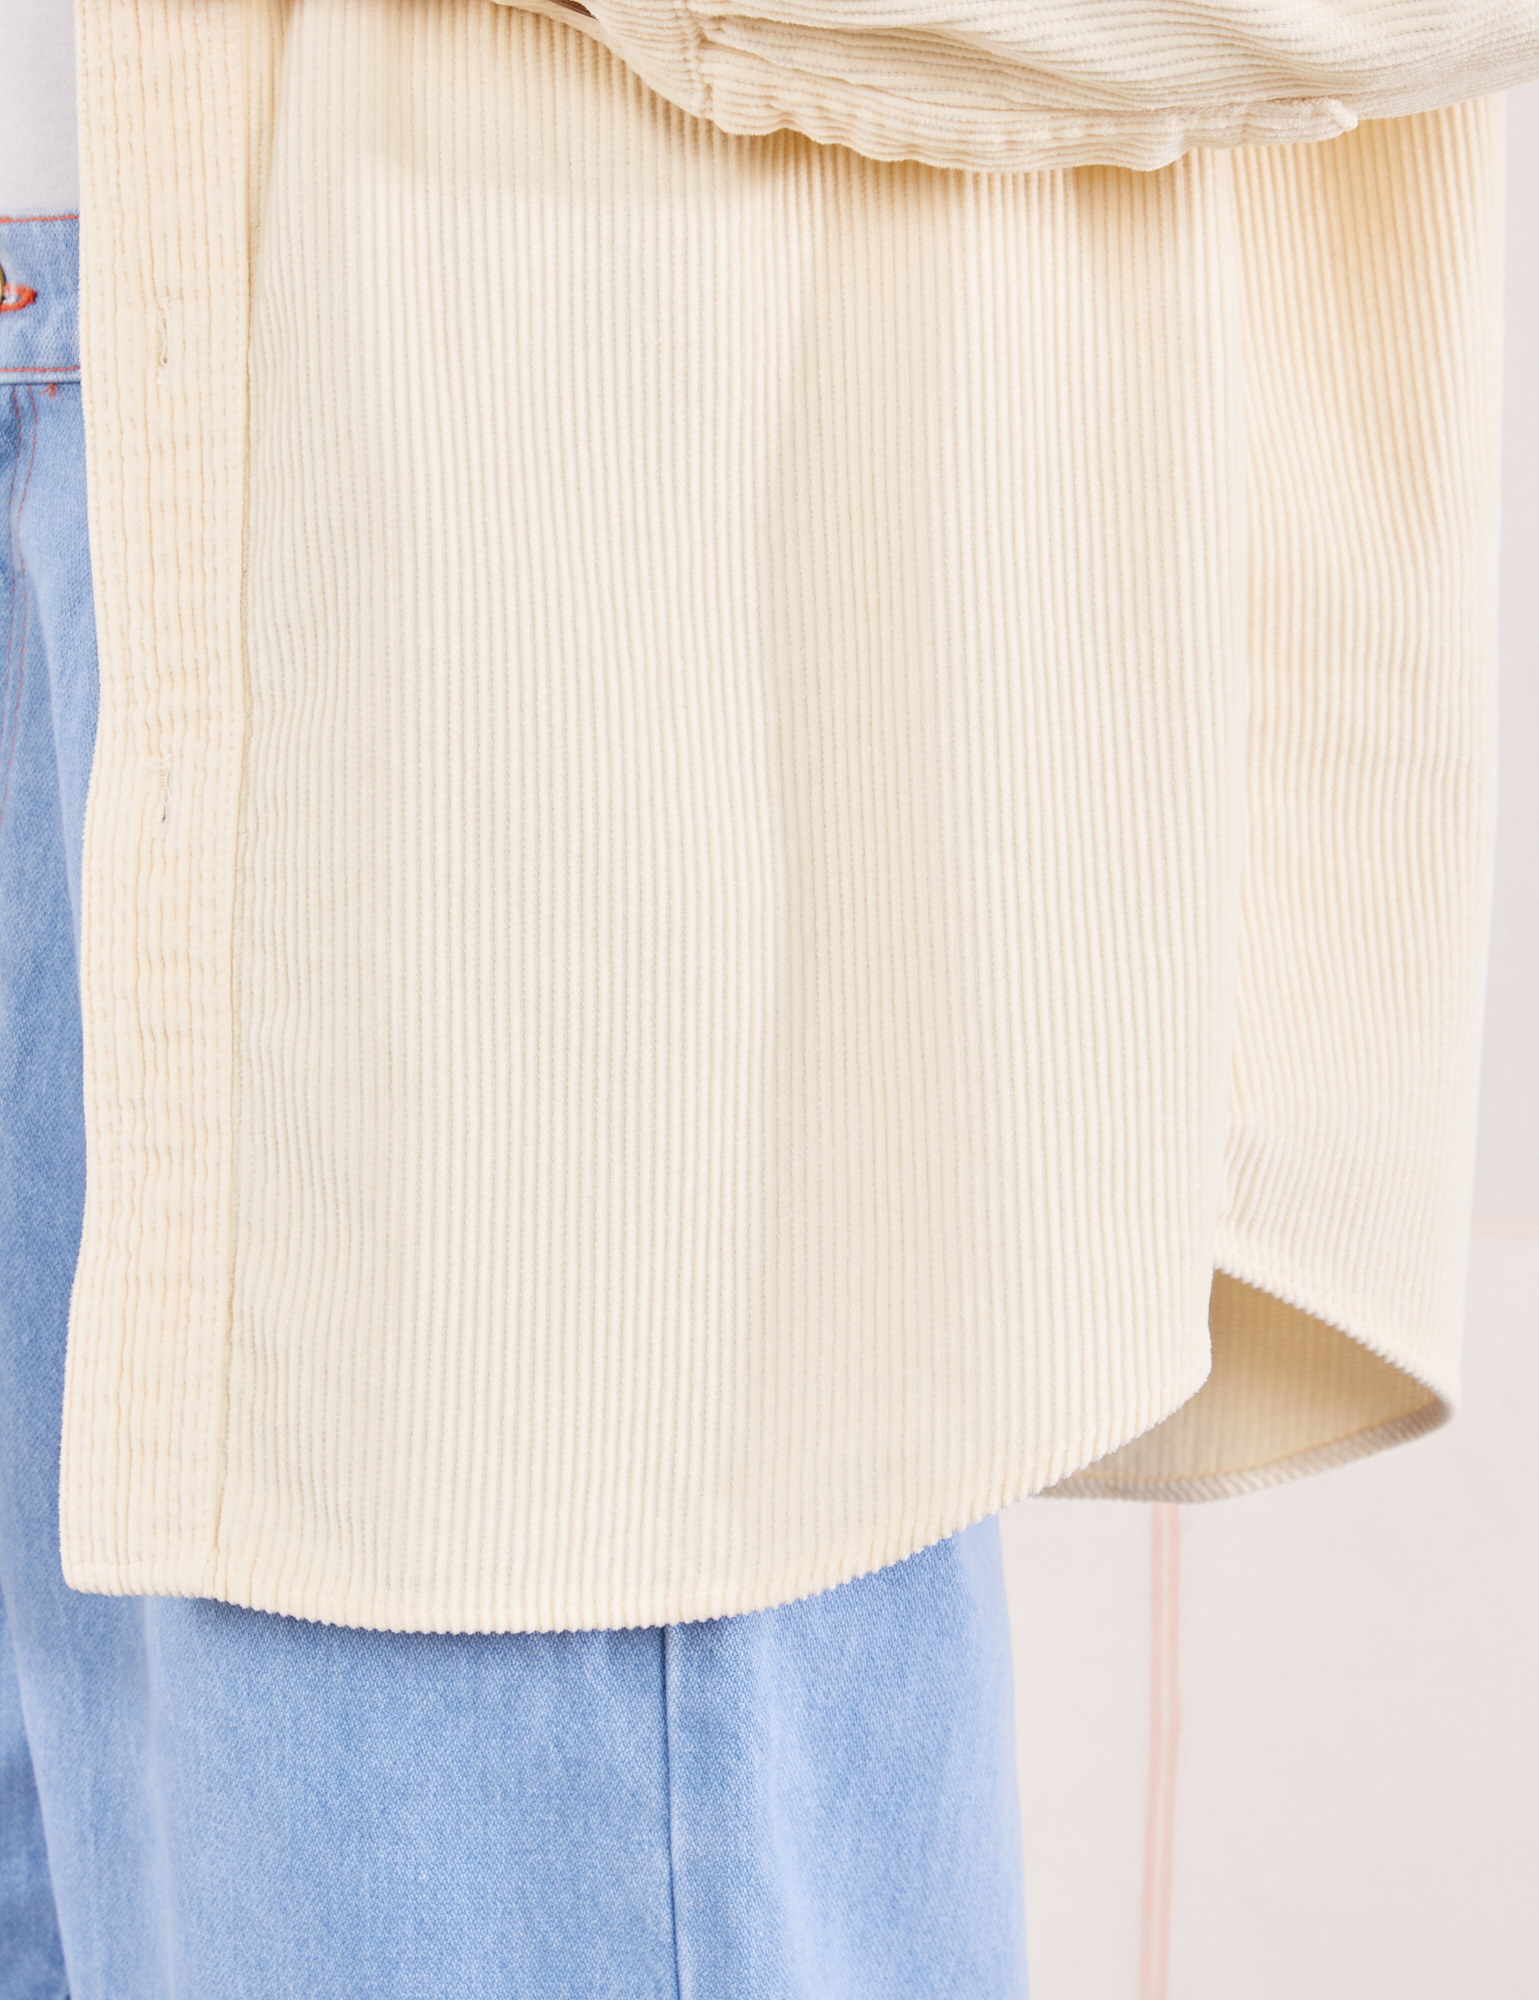 Corduroy Overshirt in Vintage Off-White hem close up on Jesse